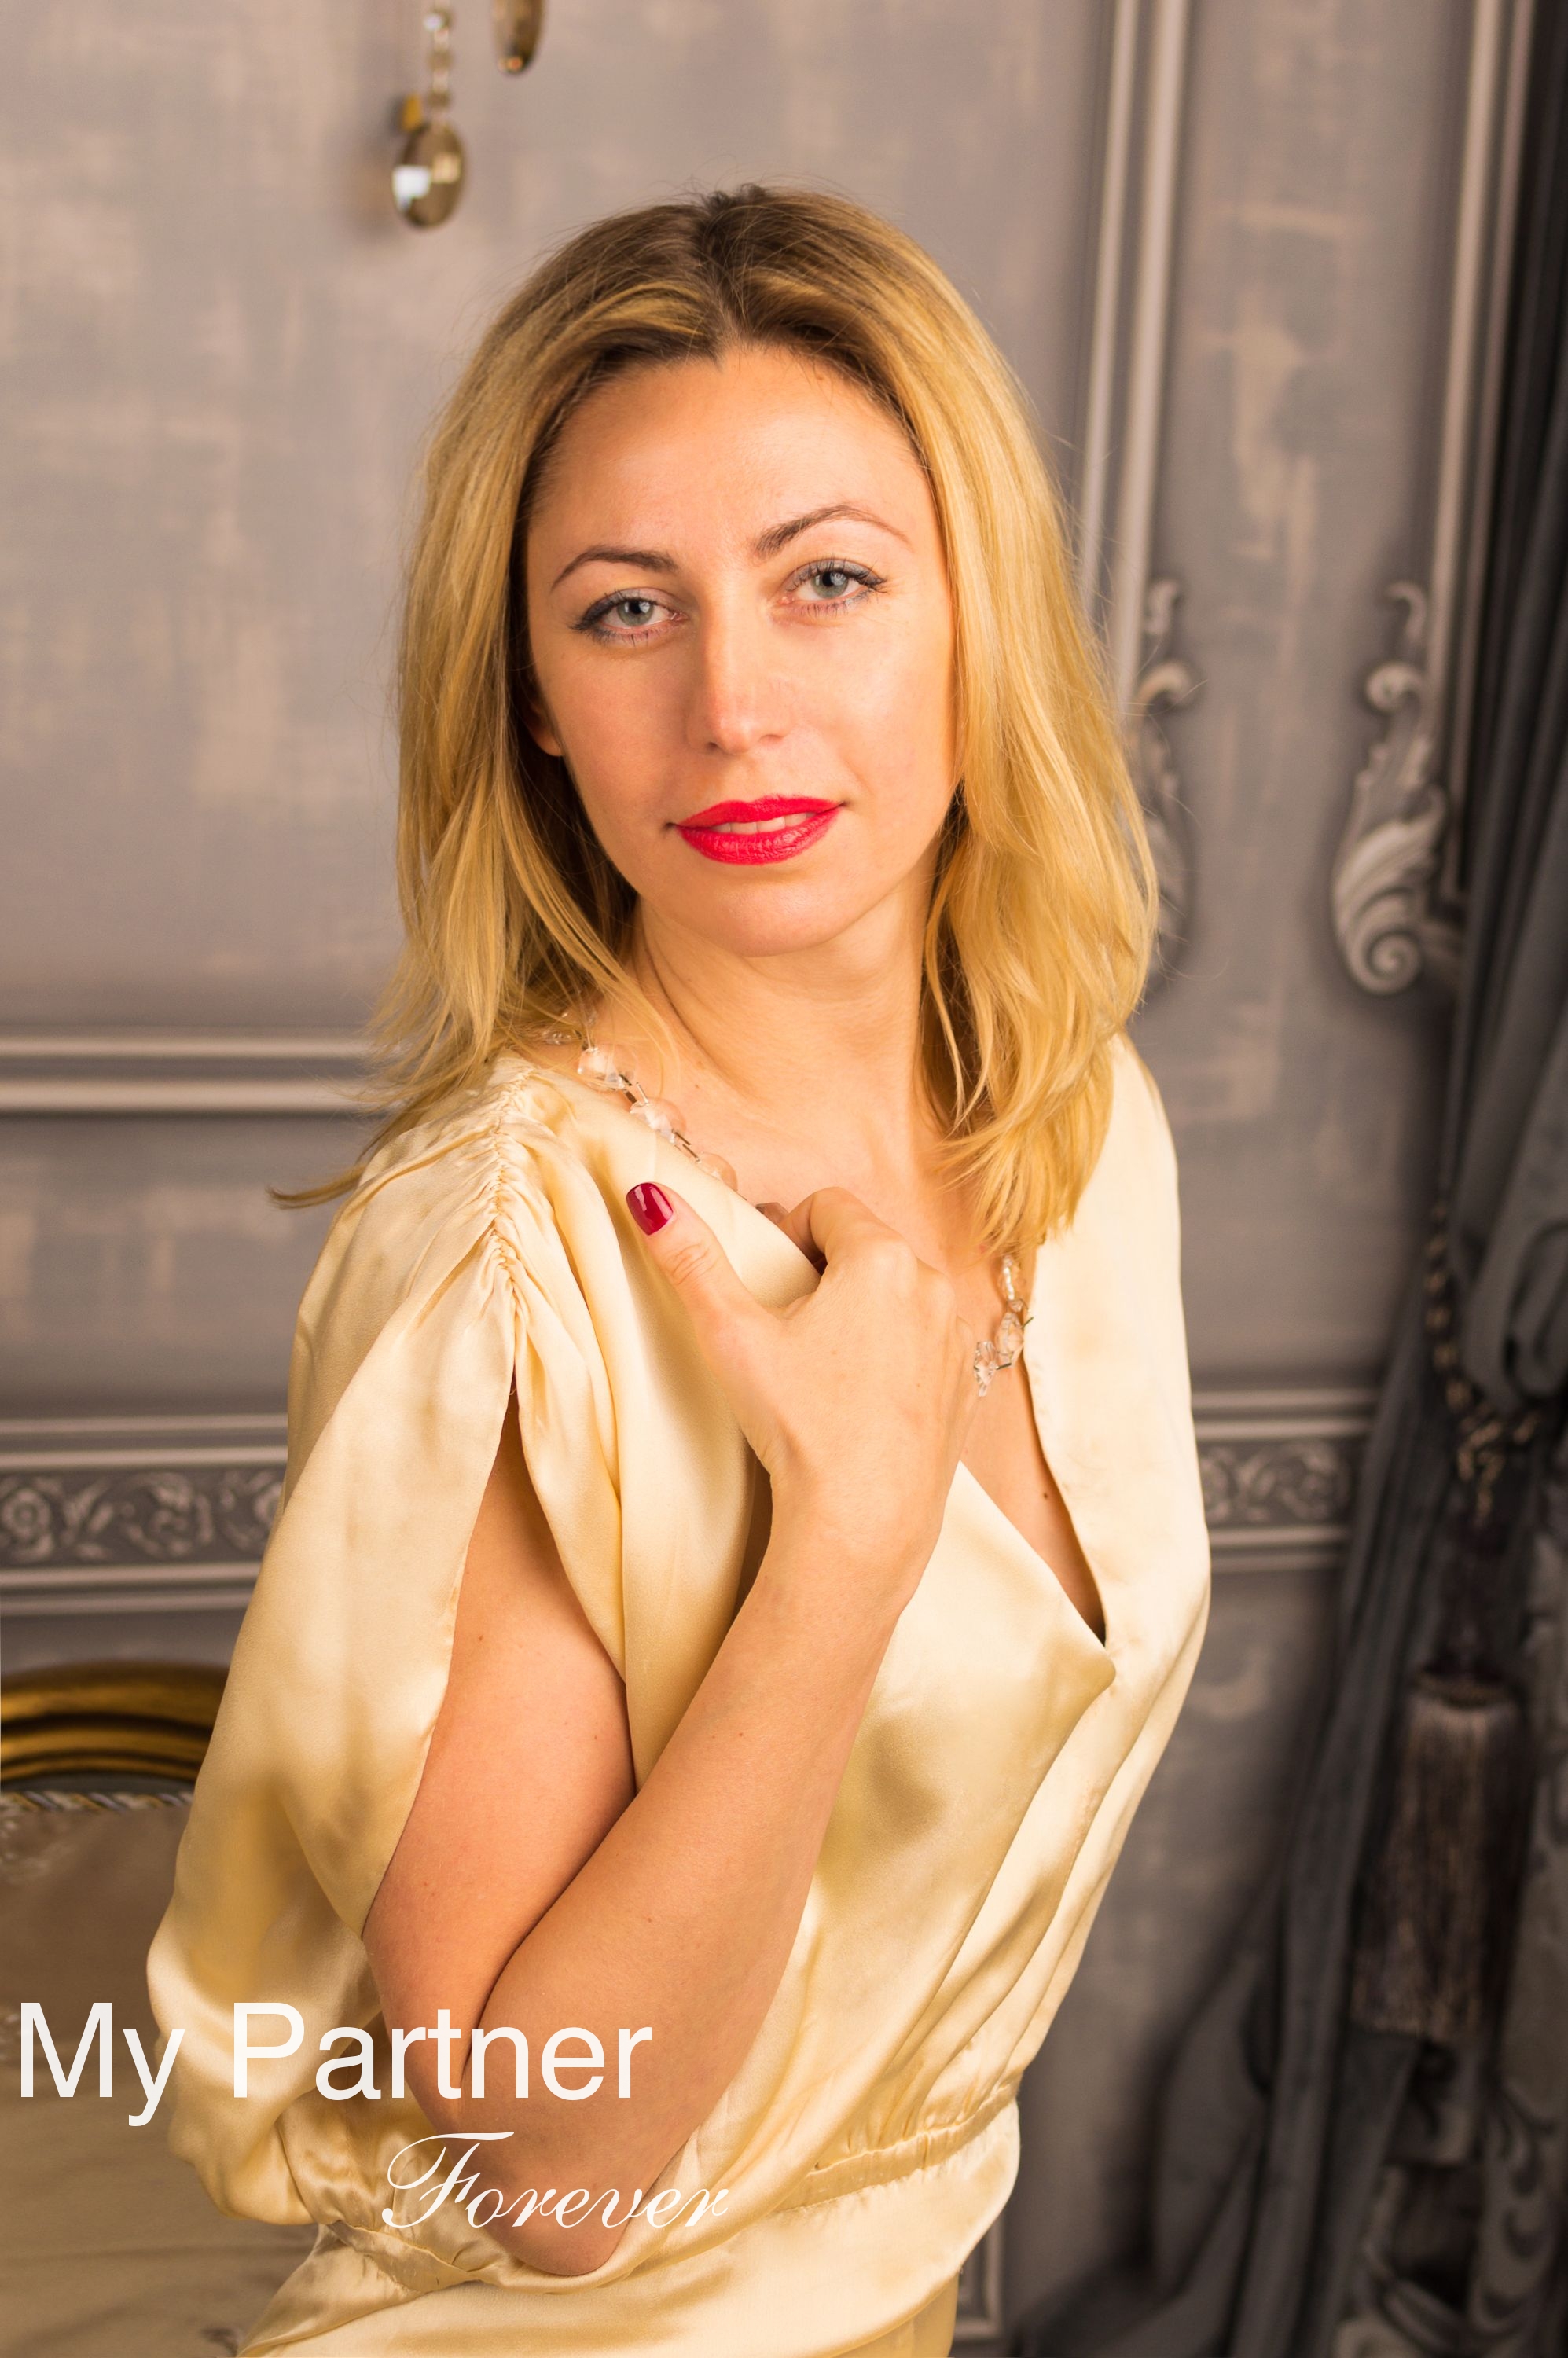 Datingsite to Meet Stunning Ukrainian Woman Anna from Kiev, Ukraine